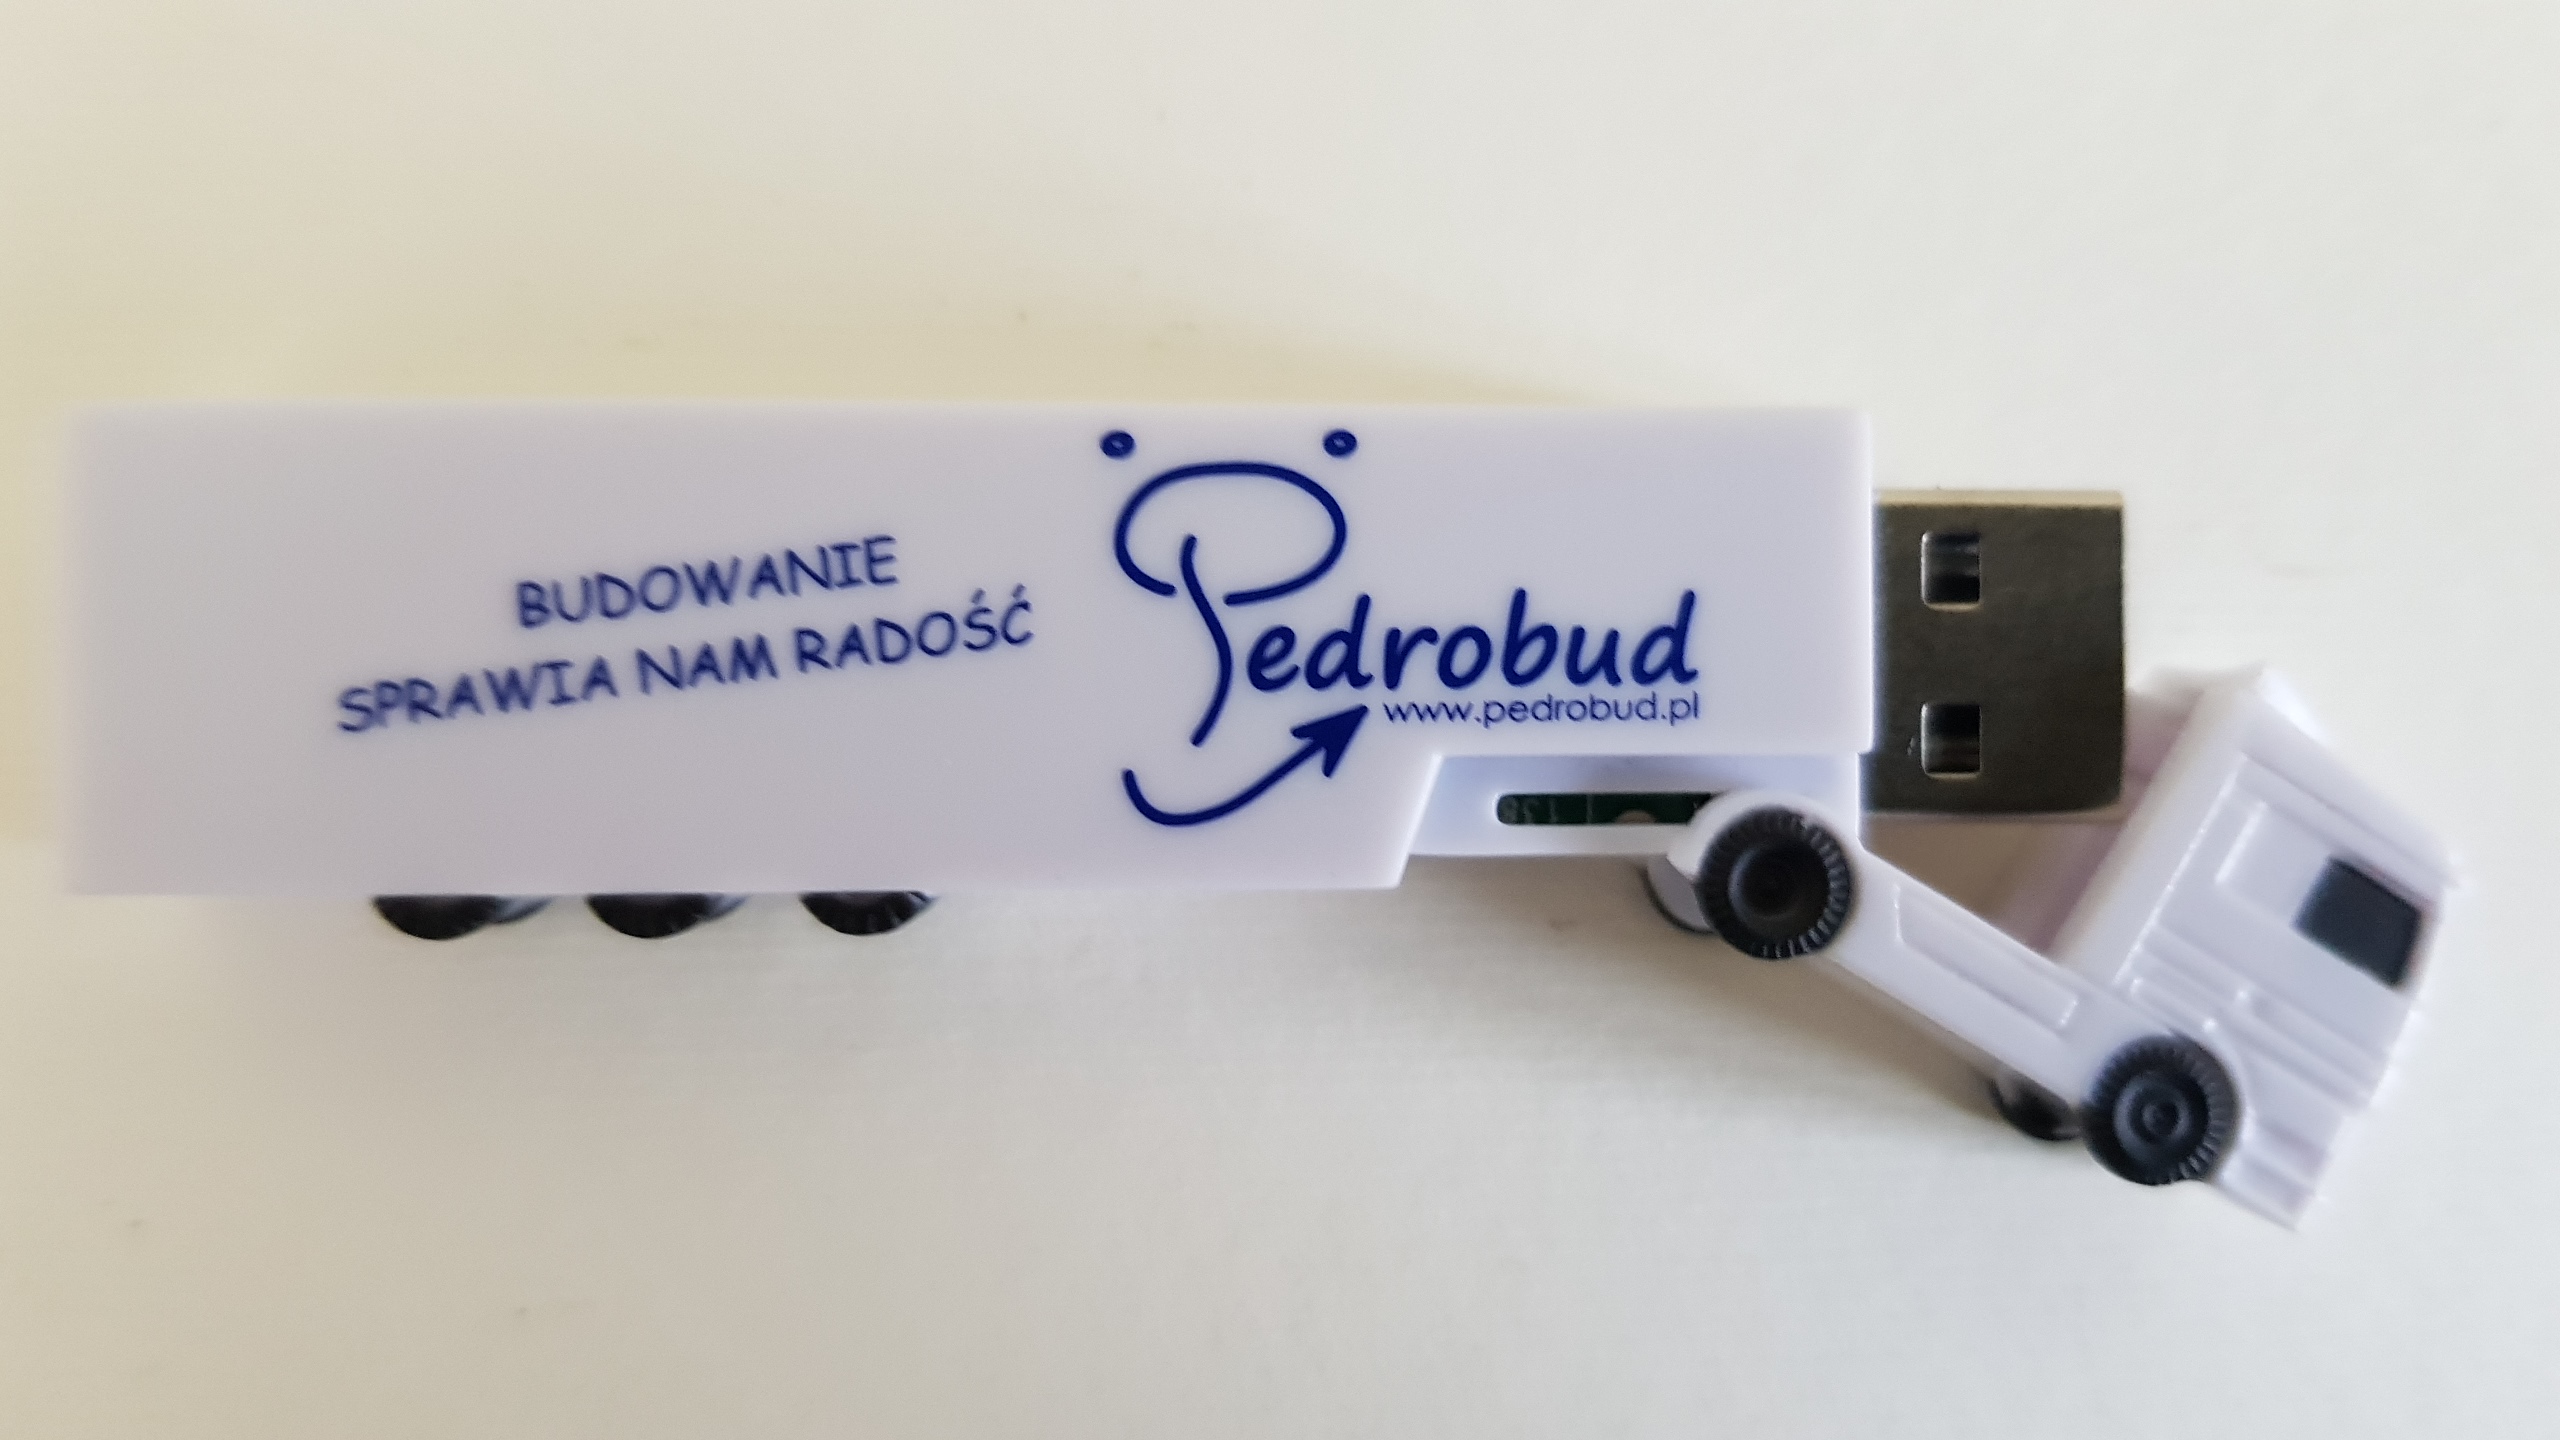 USB Pedrobud